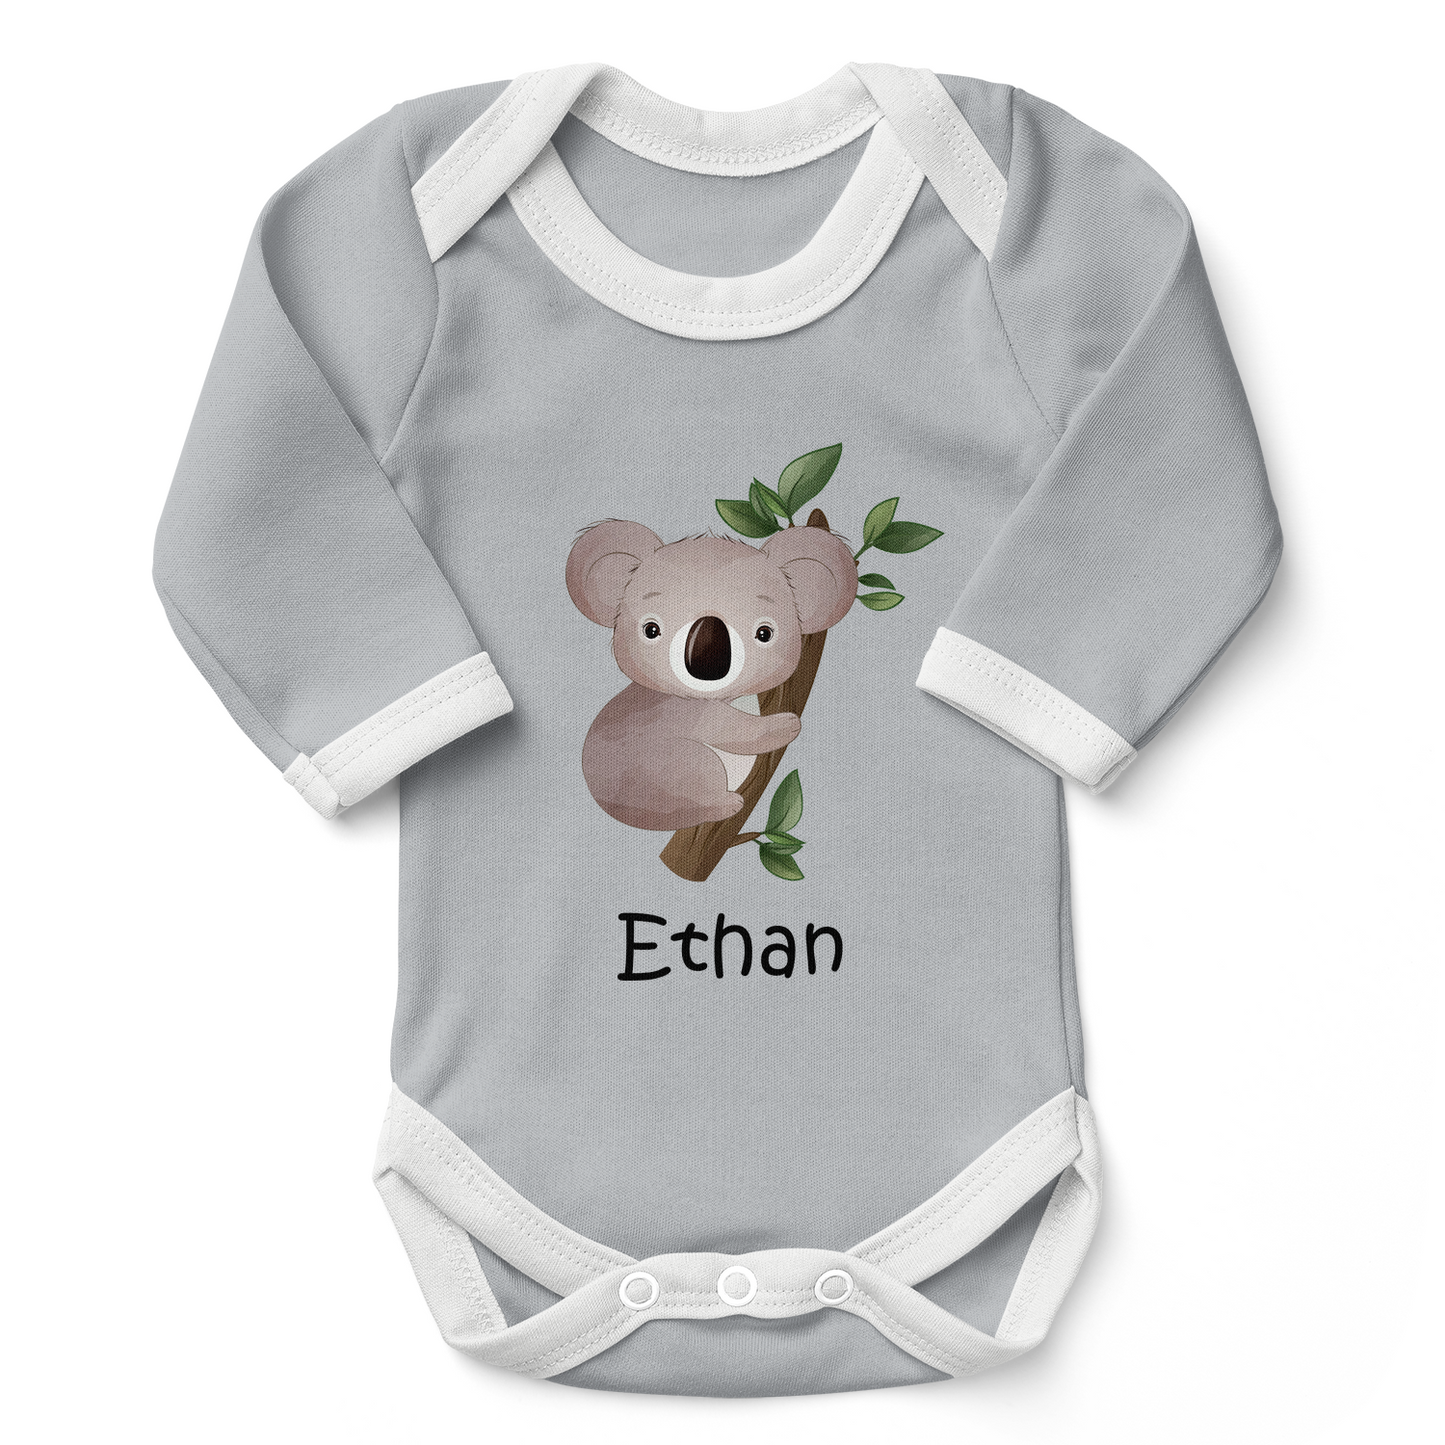 [Personalized] Organic Sleeves Baby Bodysuit - Koala